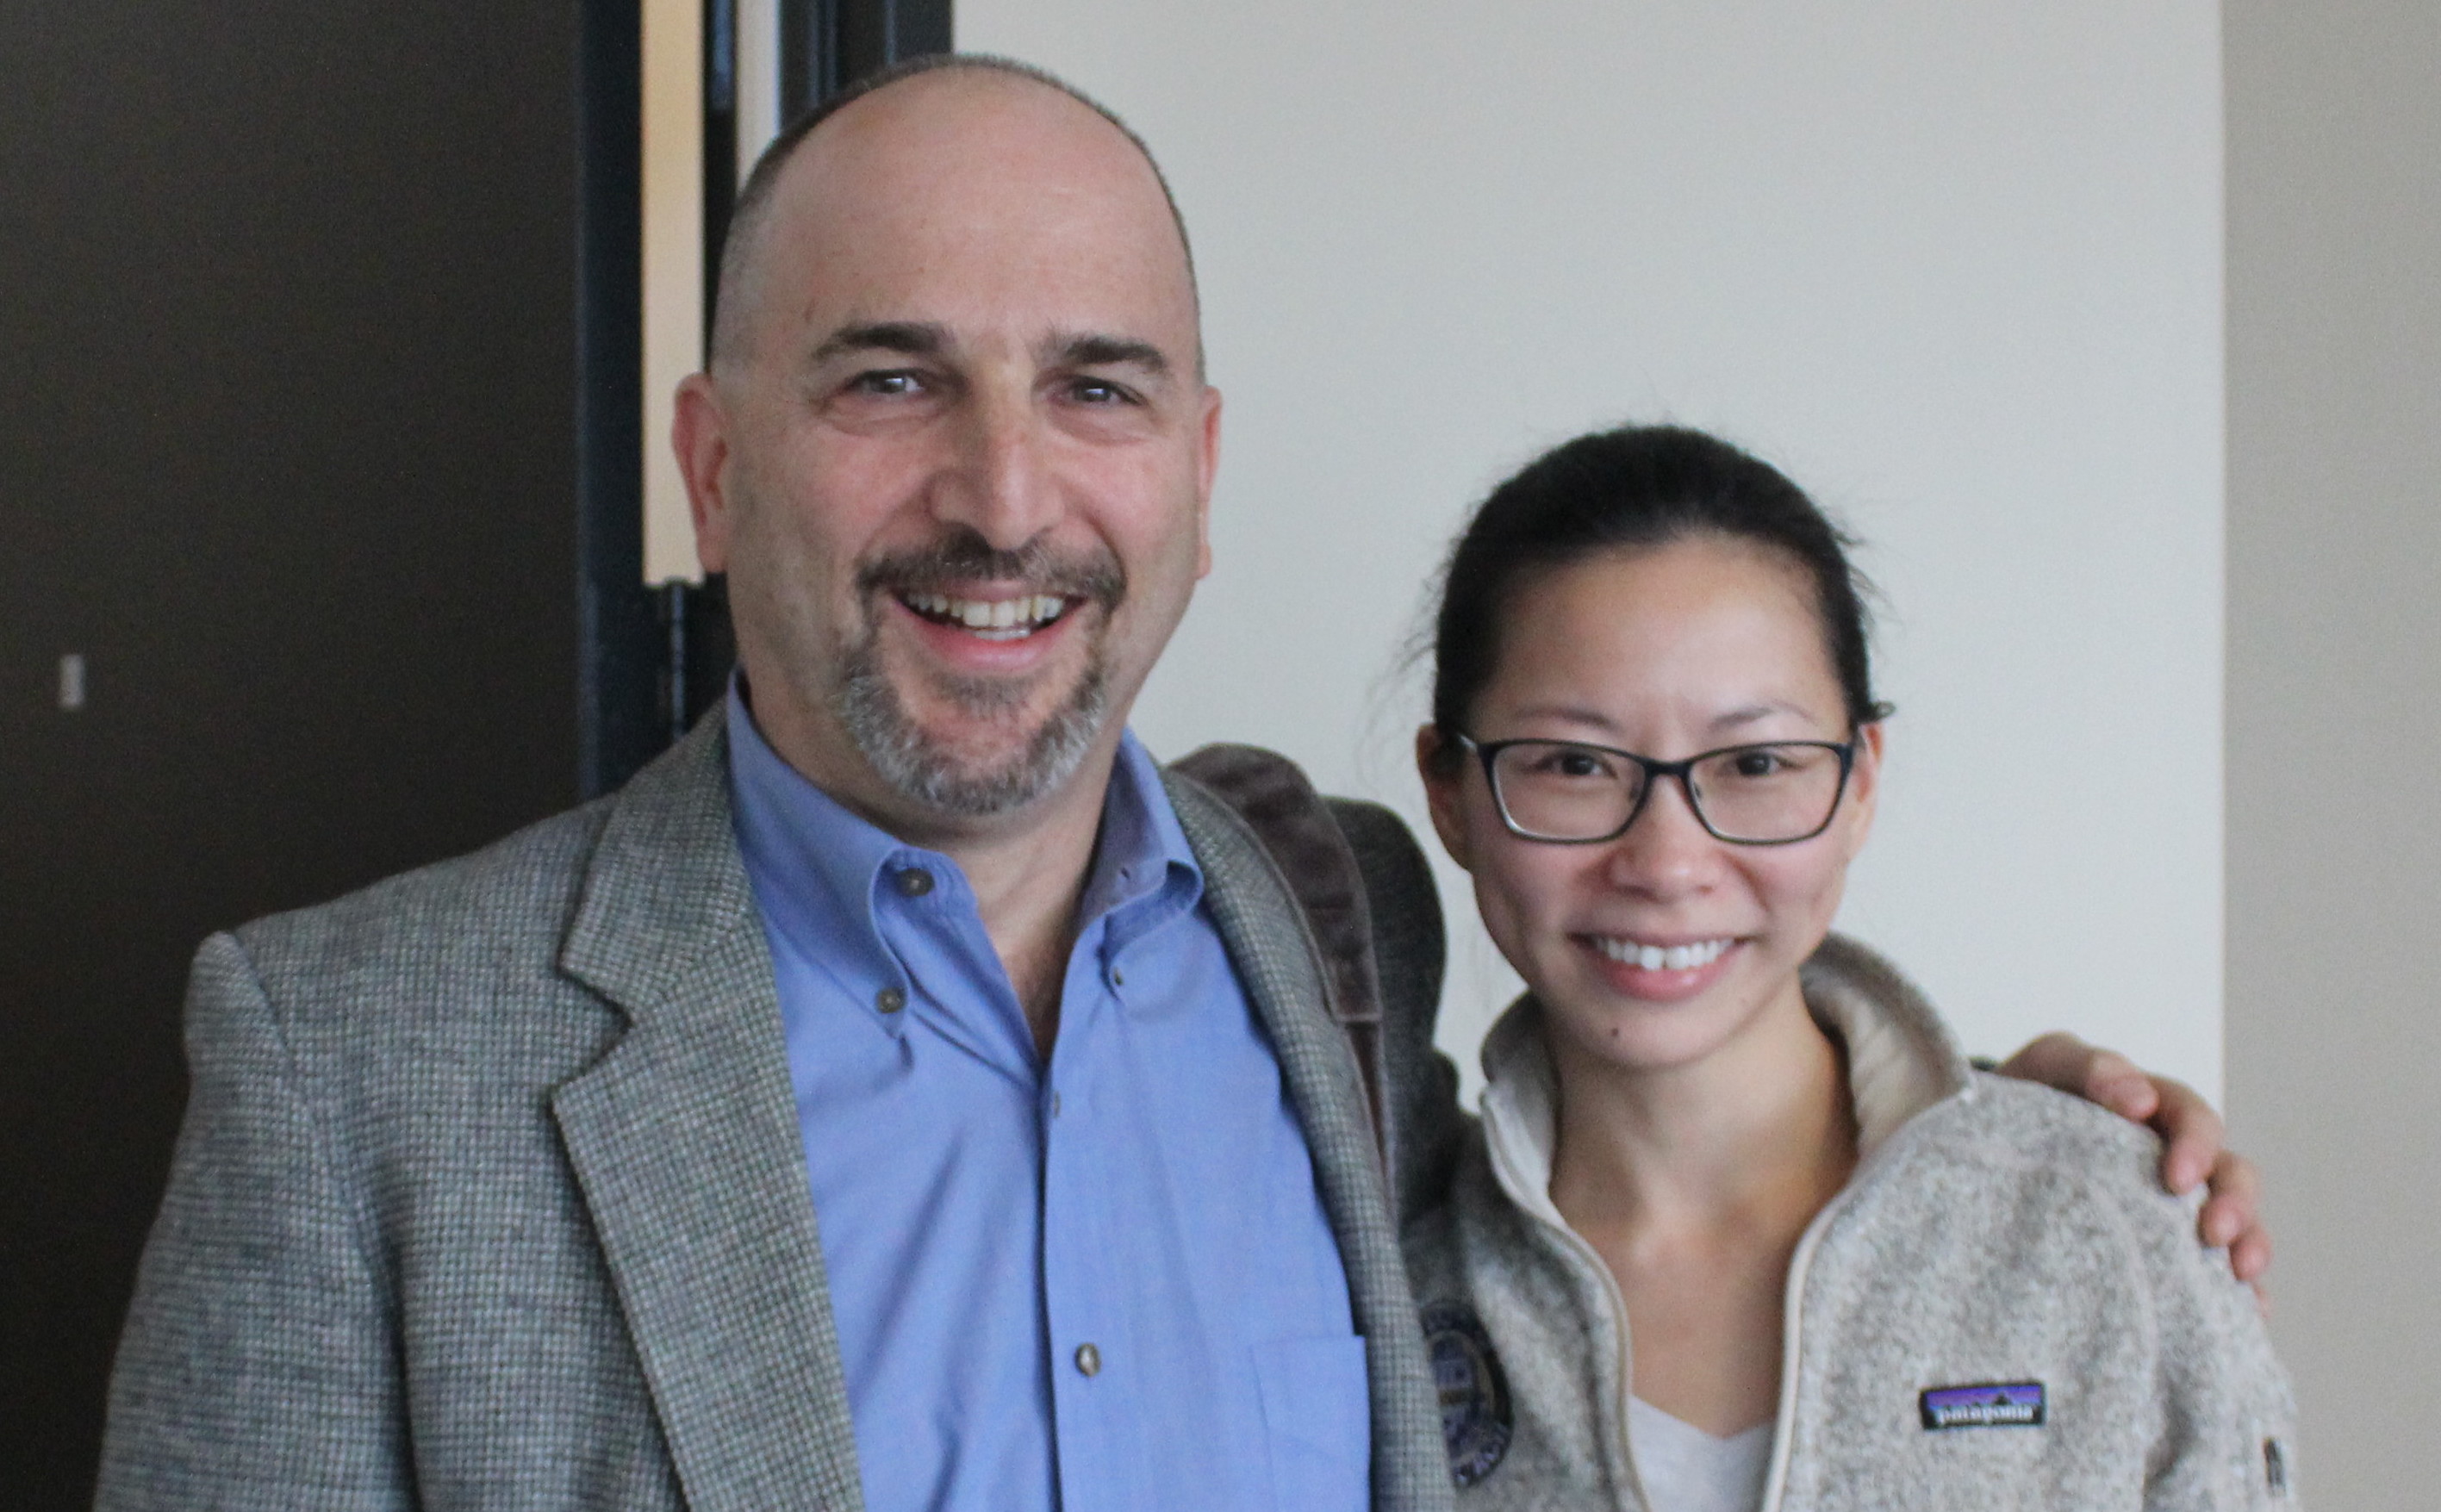 Drs. Robert Sweet and Cindy Chou